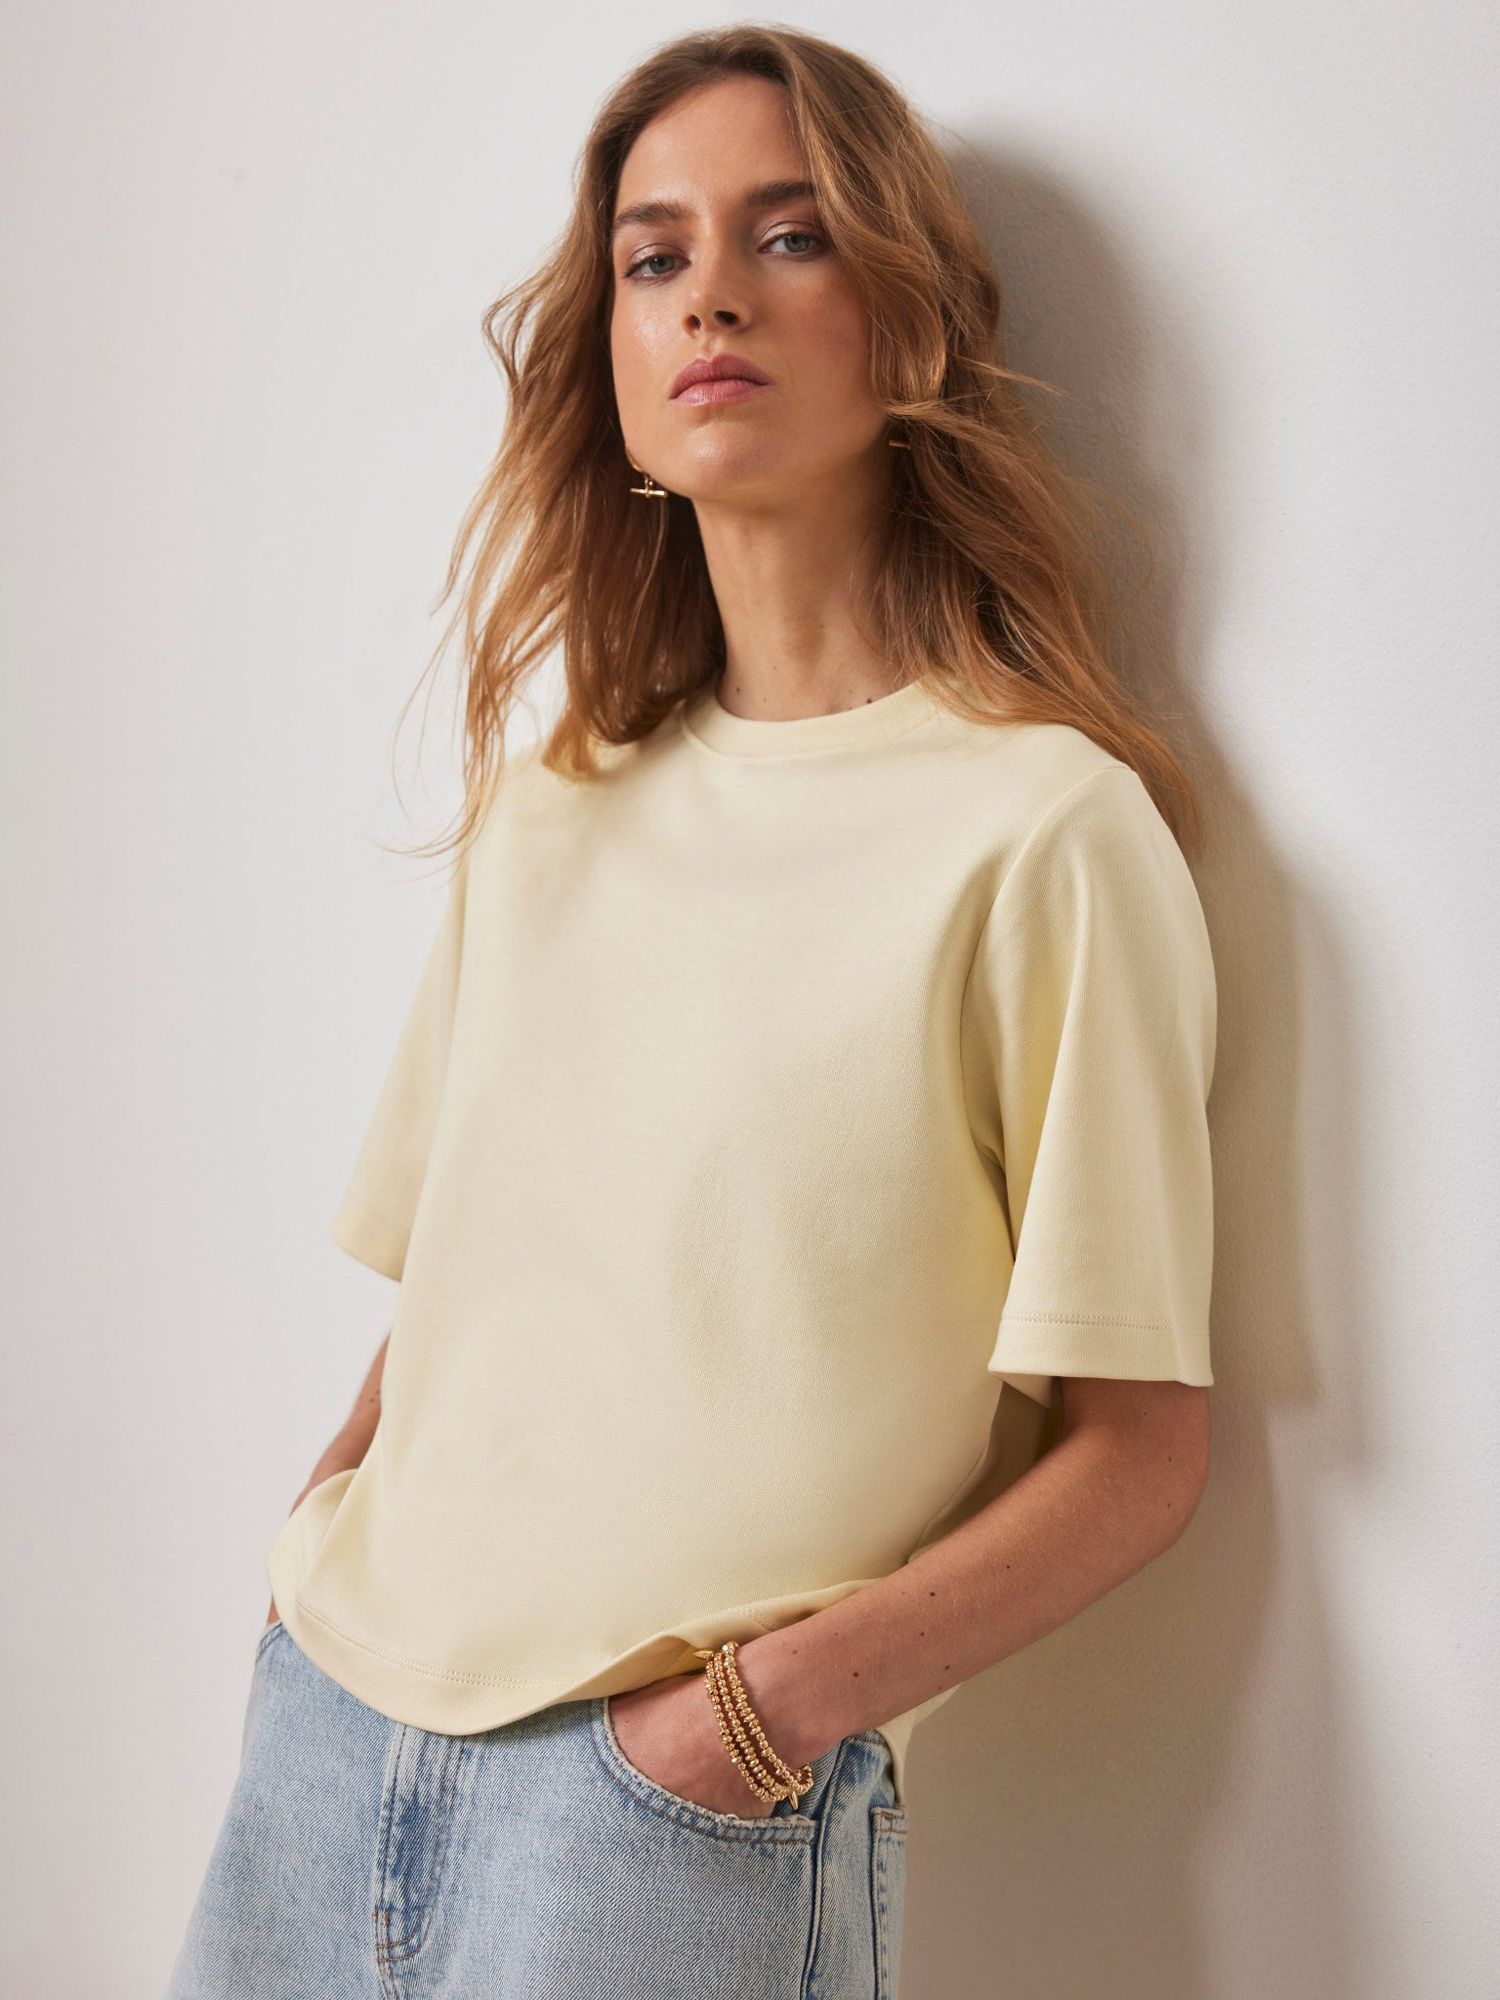 Mint Velvet Ultimate Cotton T-Shirt, Yellow, XS